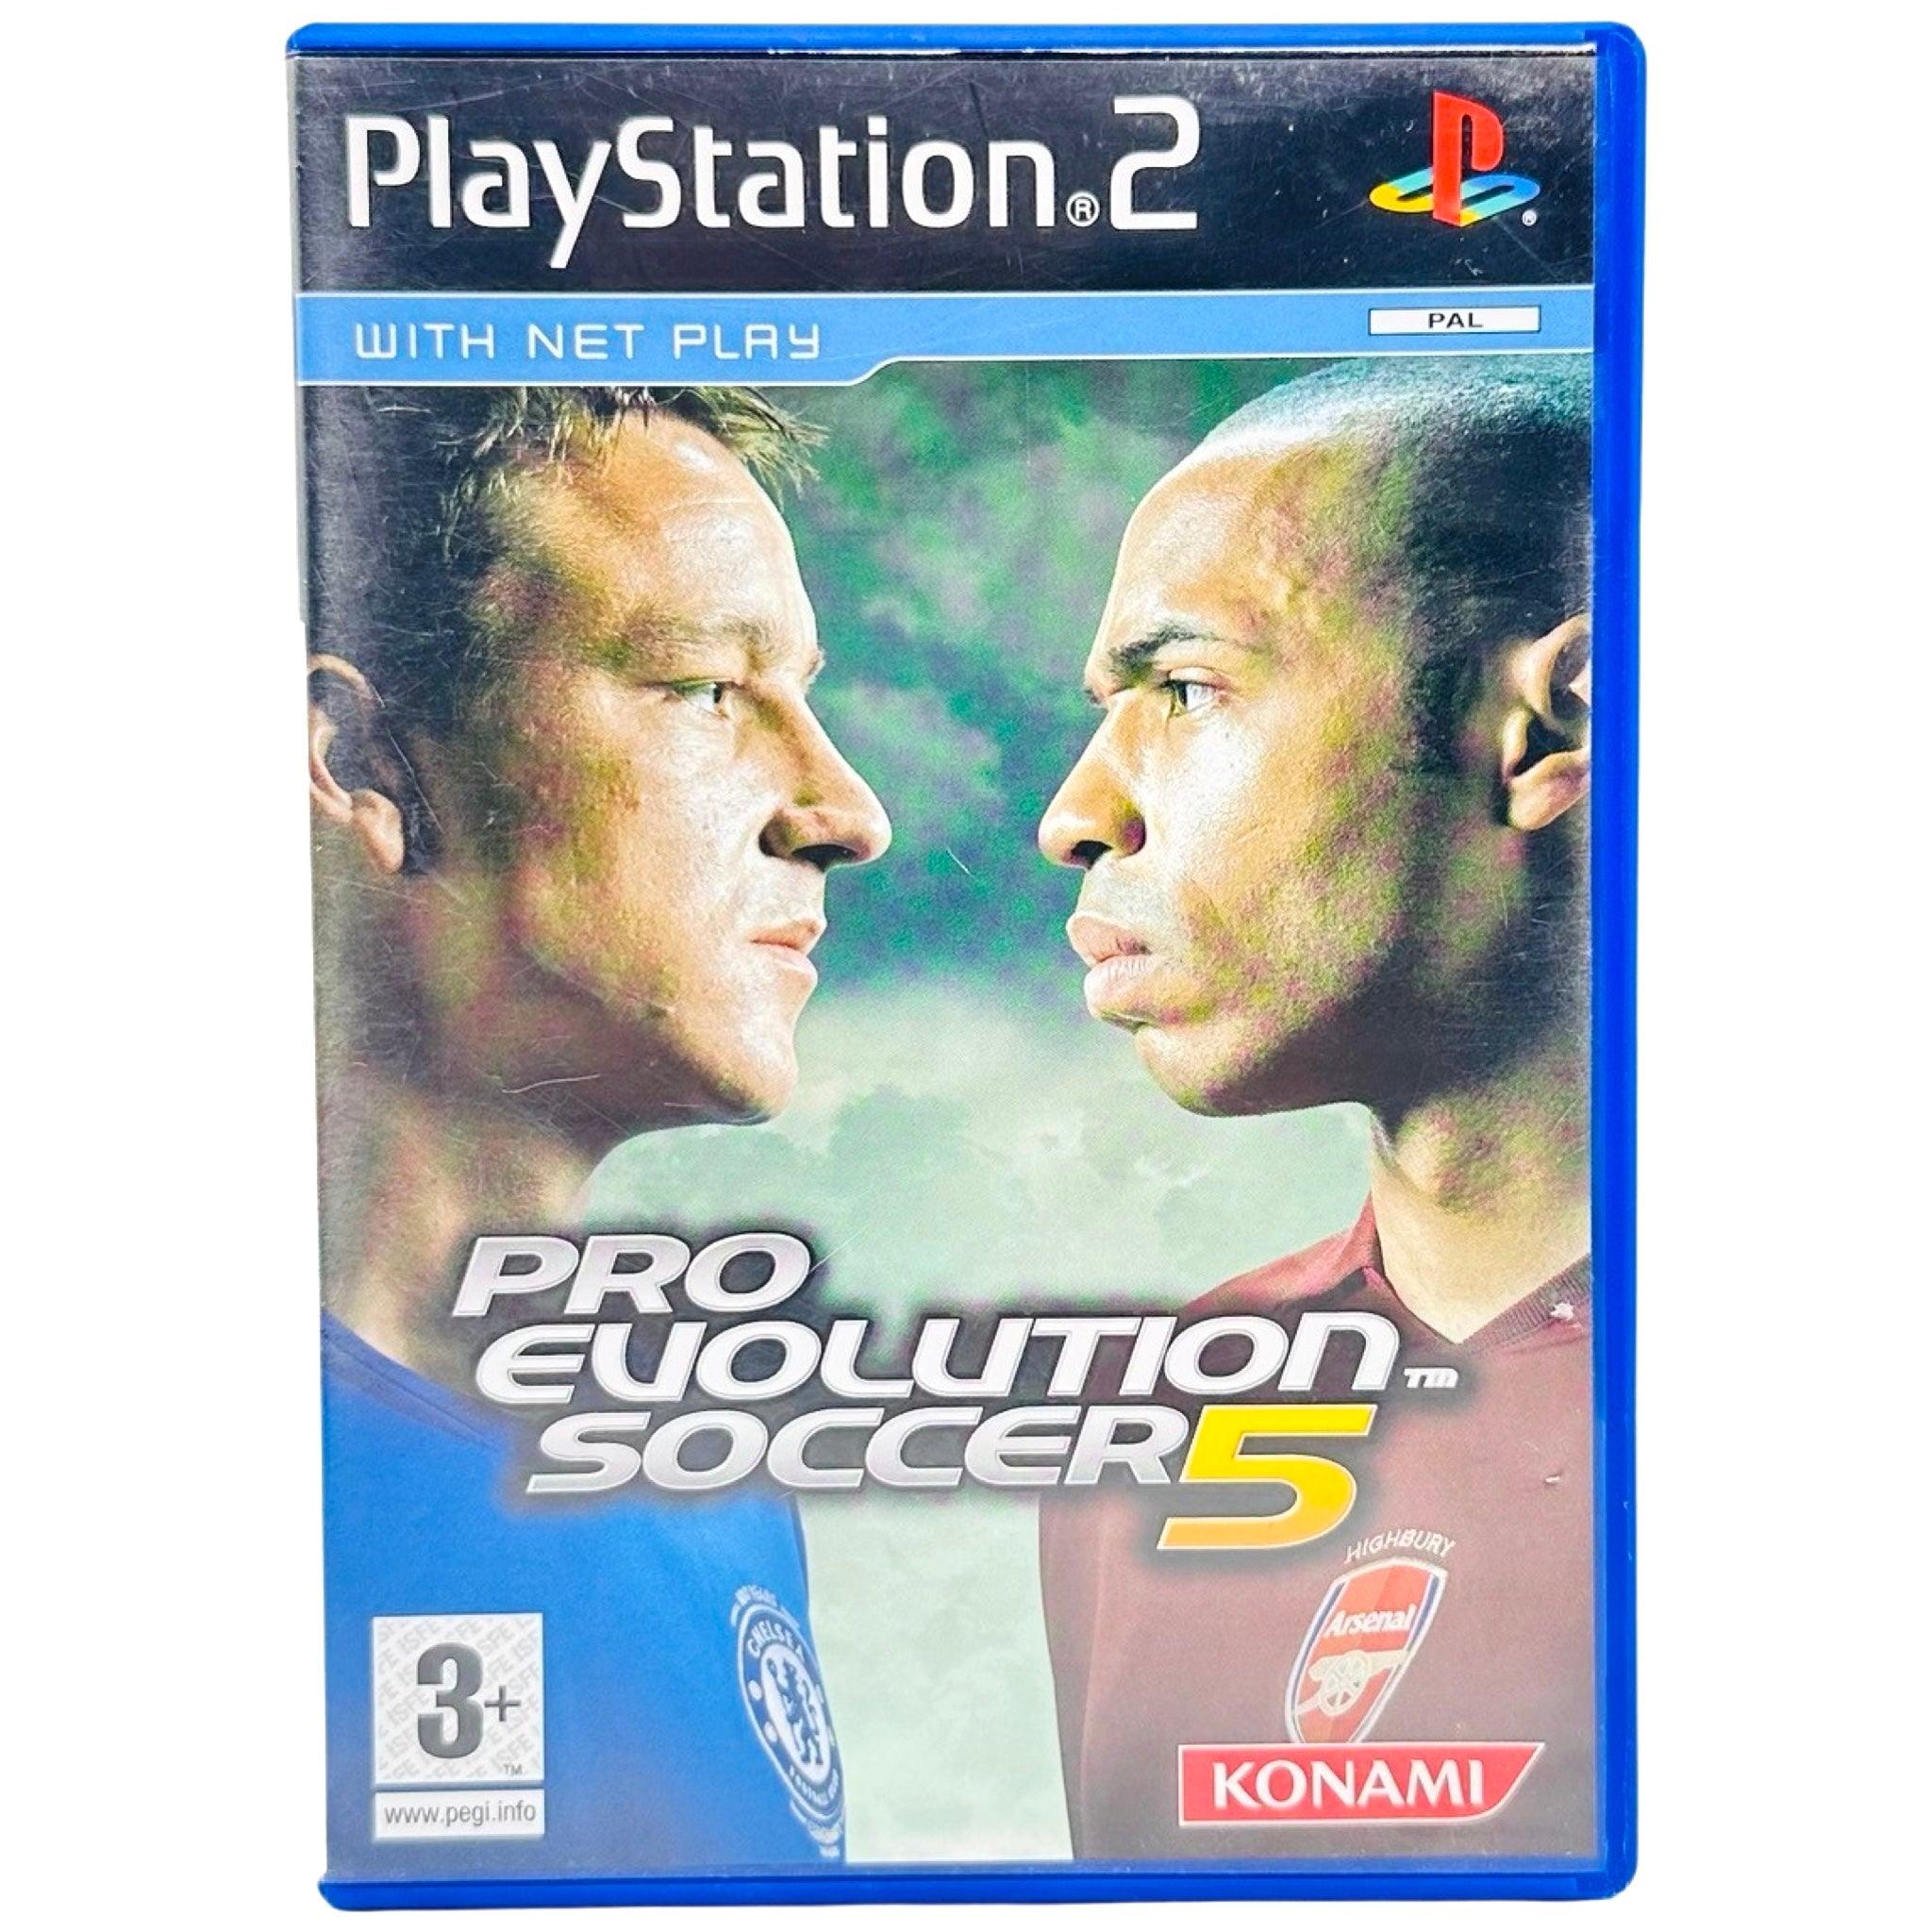 PS2: Pro Evolution Soccer 5 - RetroGaming.no